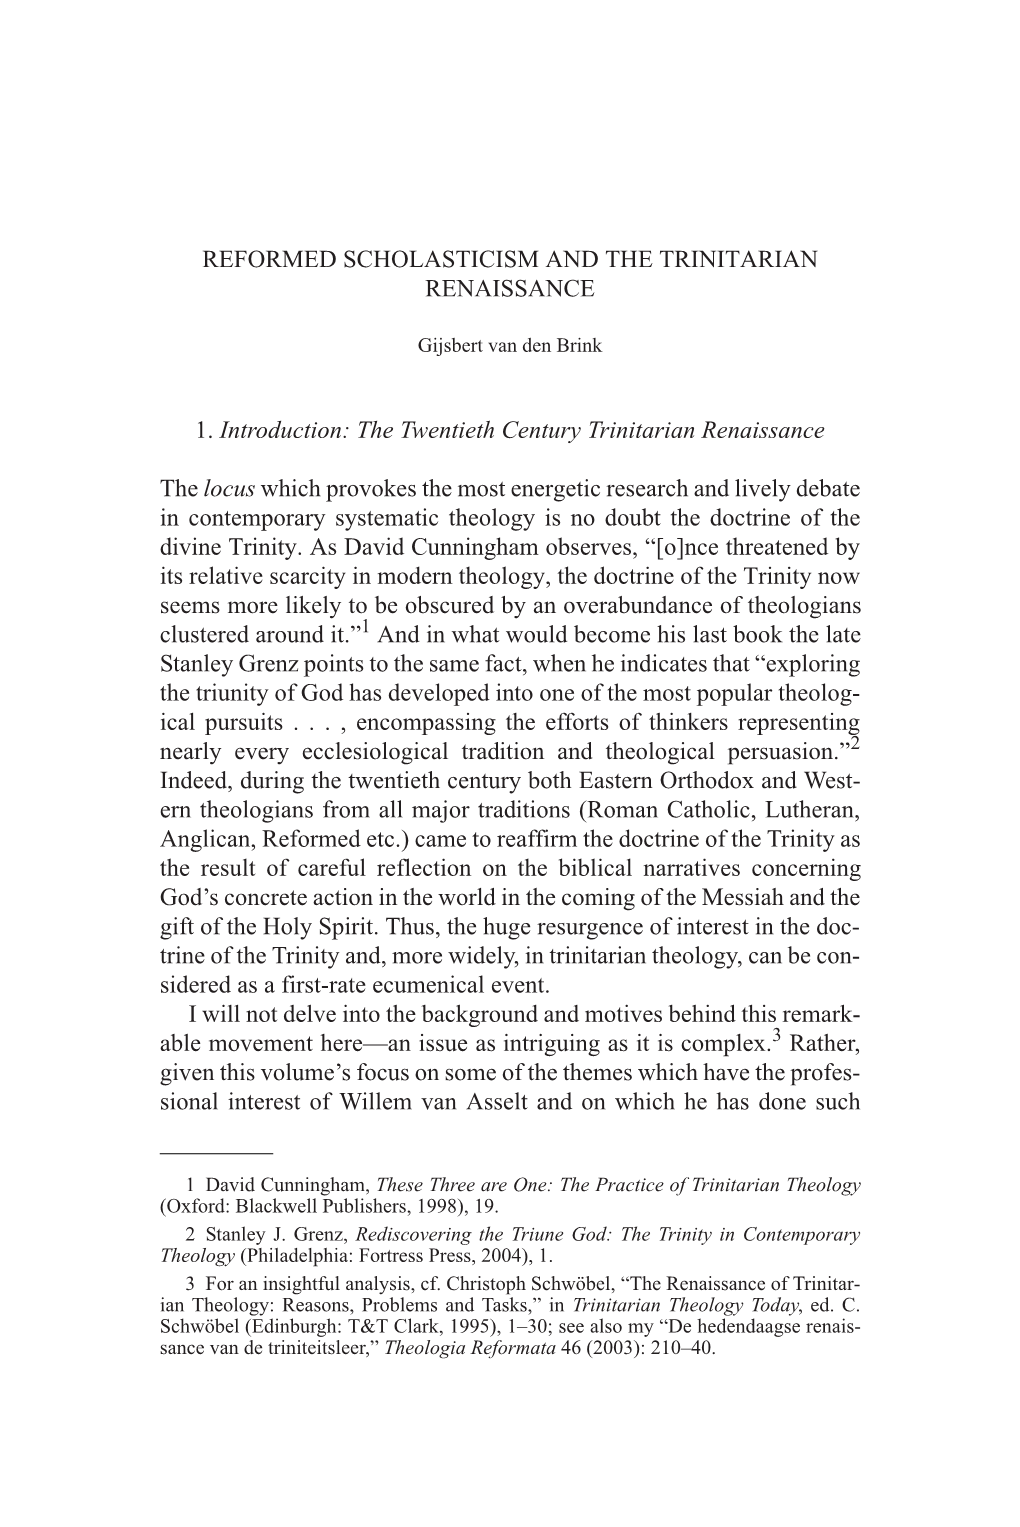 The Twentieth Century Trinitarian Renaissance the Locus